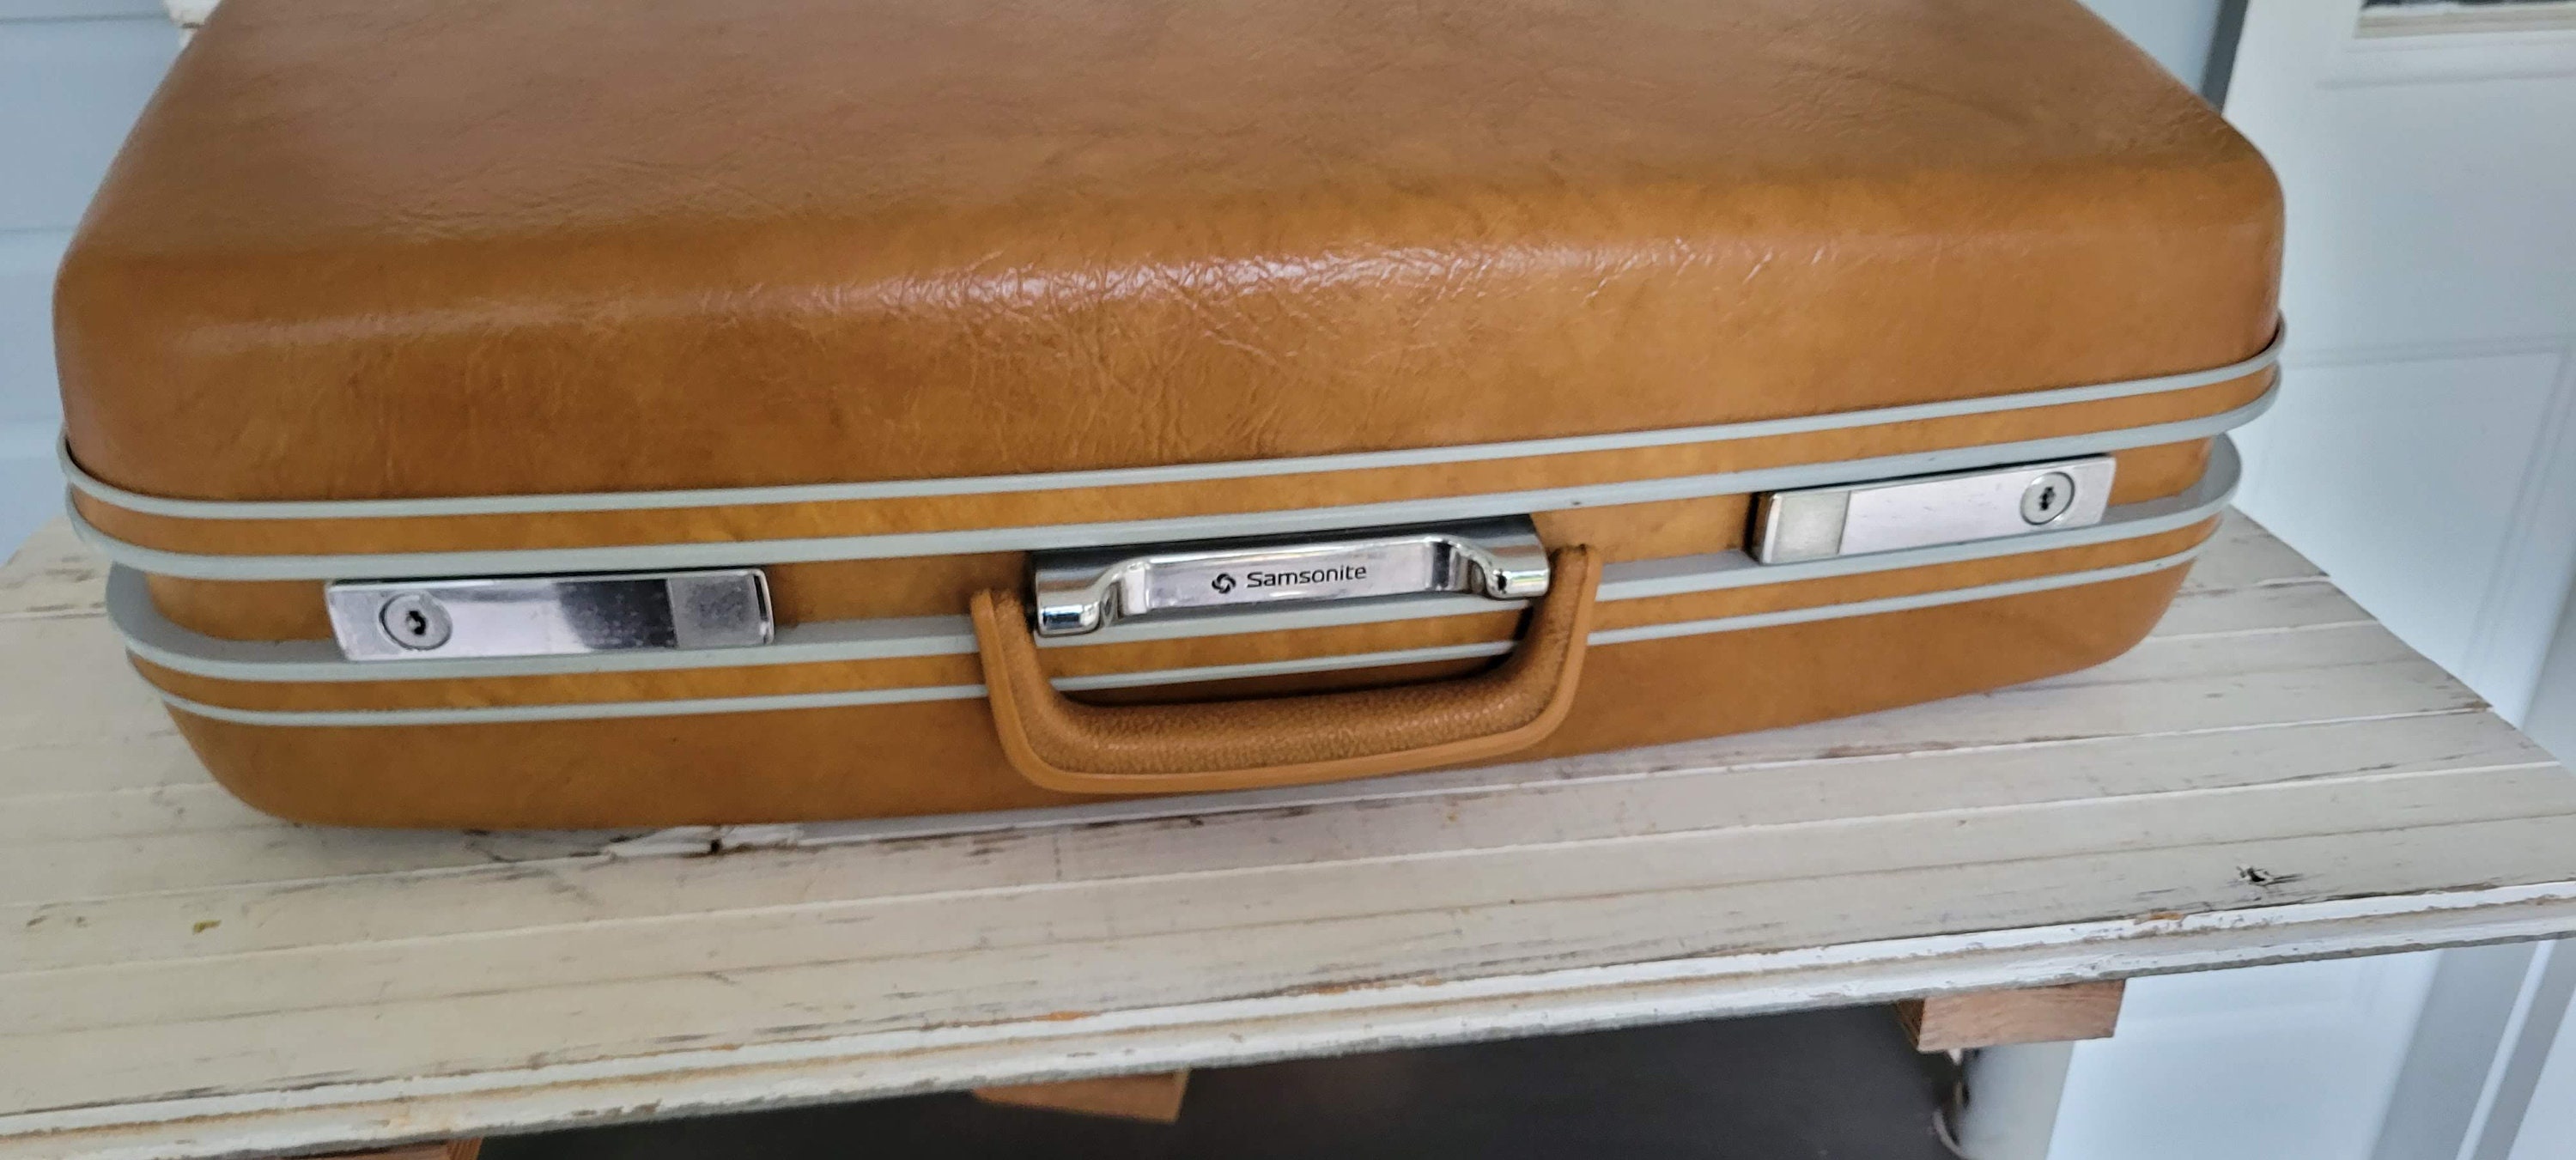 Vintage Samsonite Suitcase Burnt Orange Suitcase Travel - Etsy